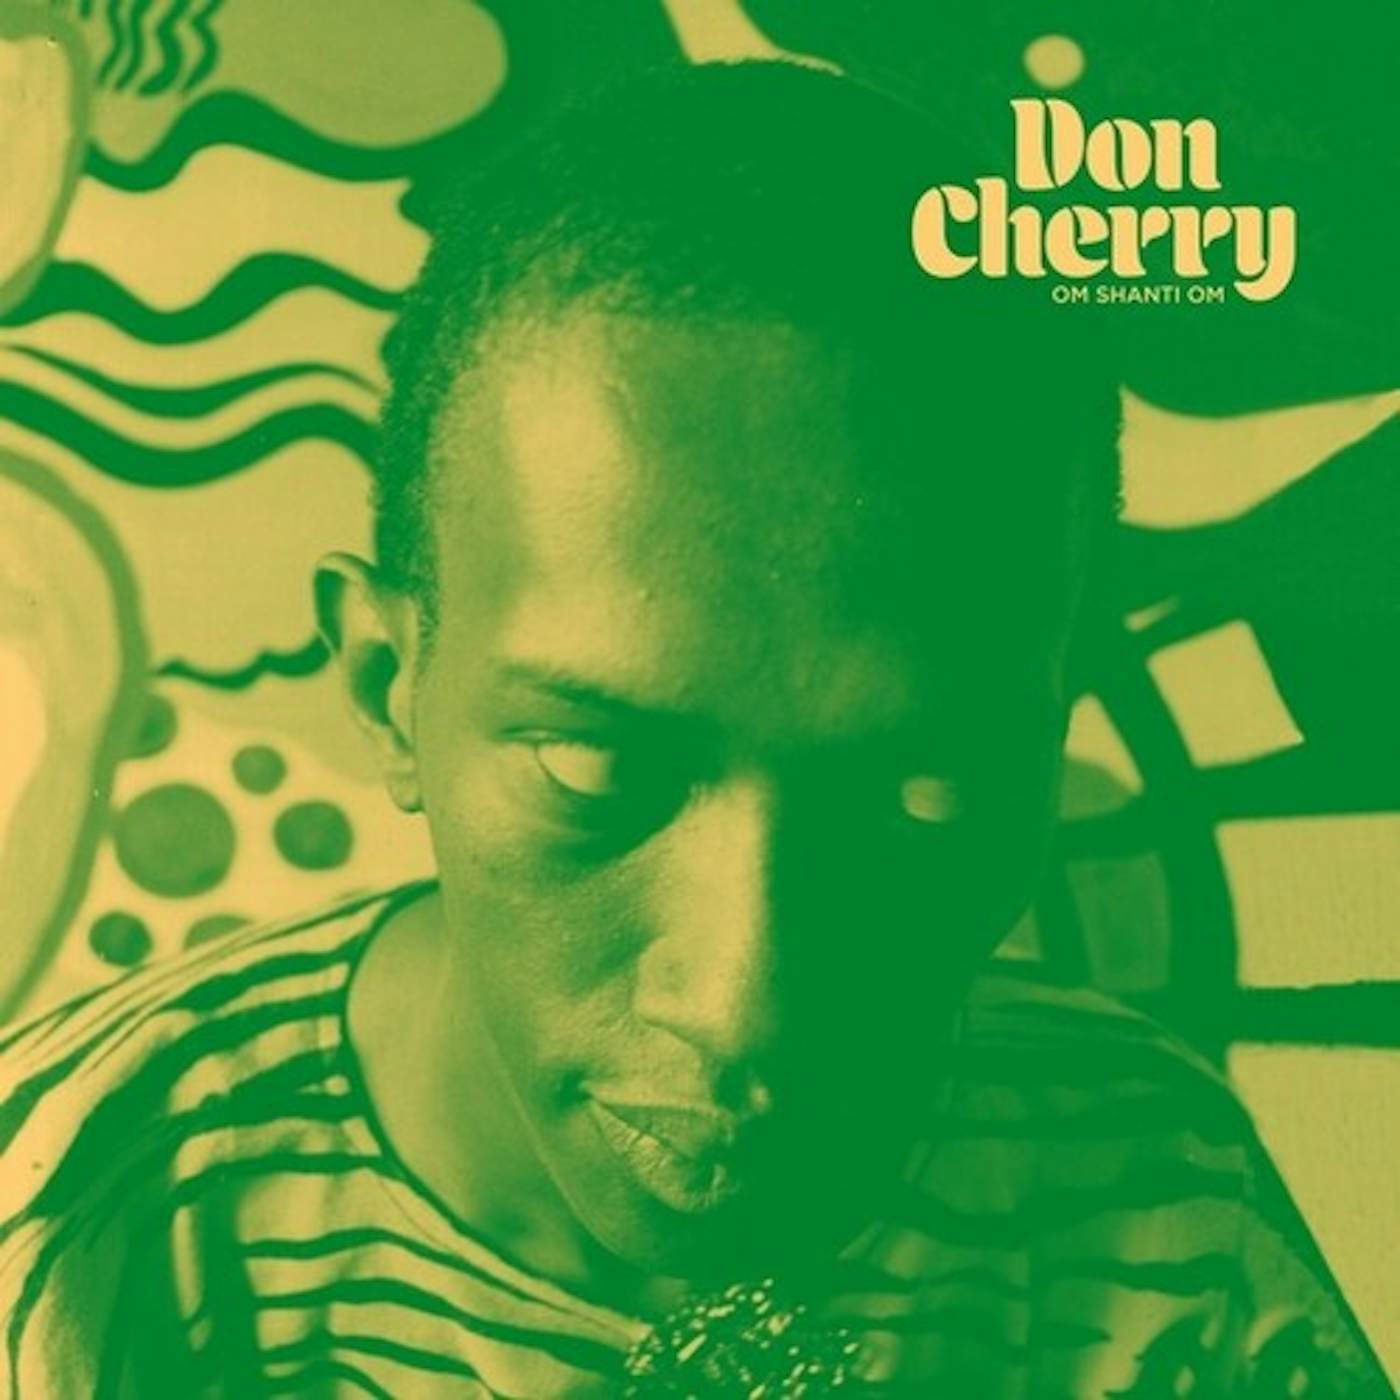 Don Cherry OM SHANTI OM CD